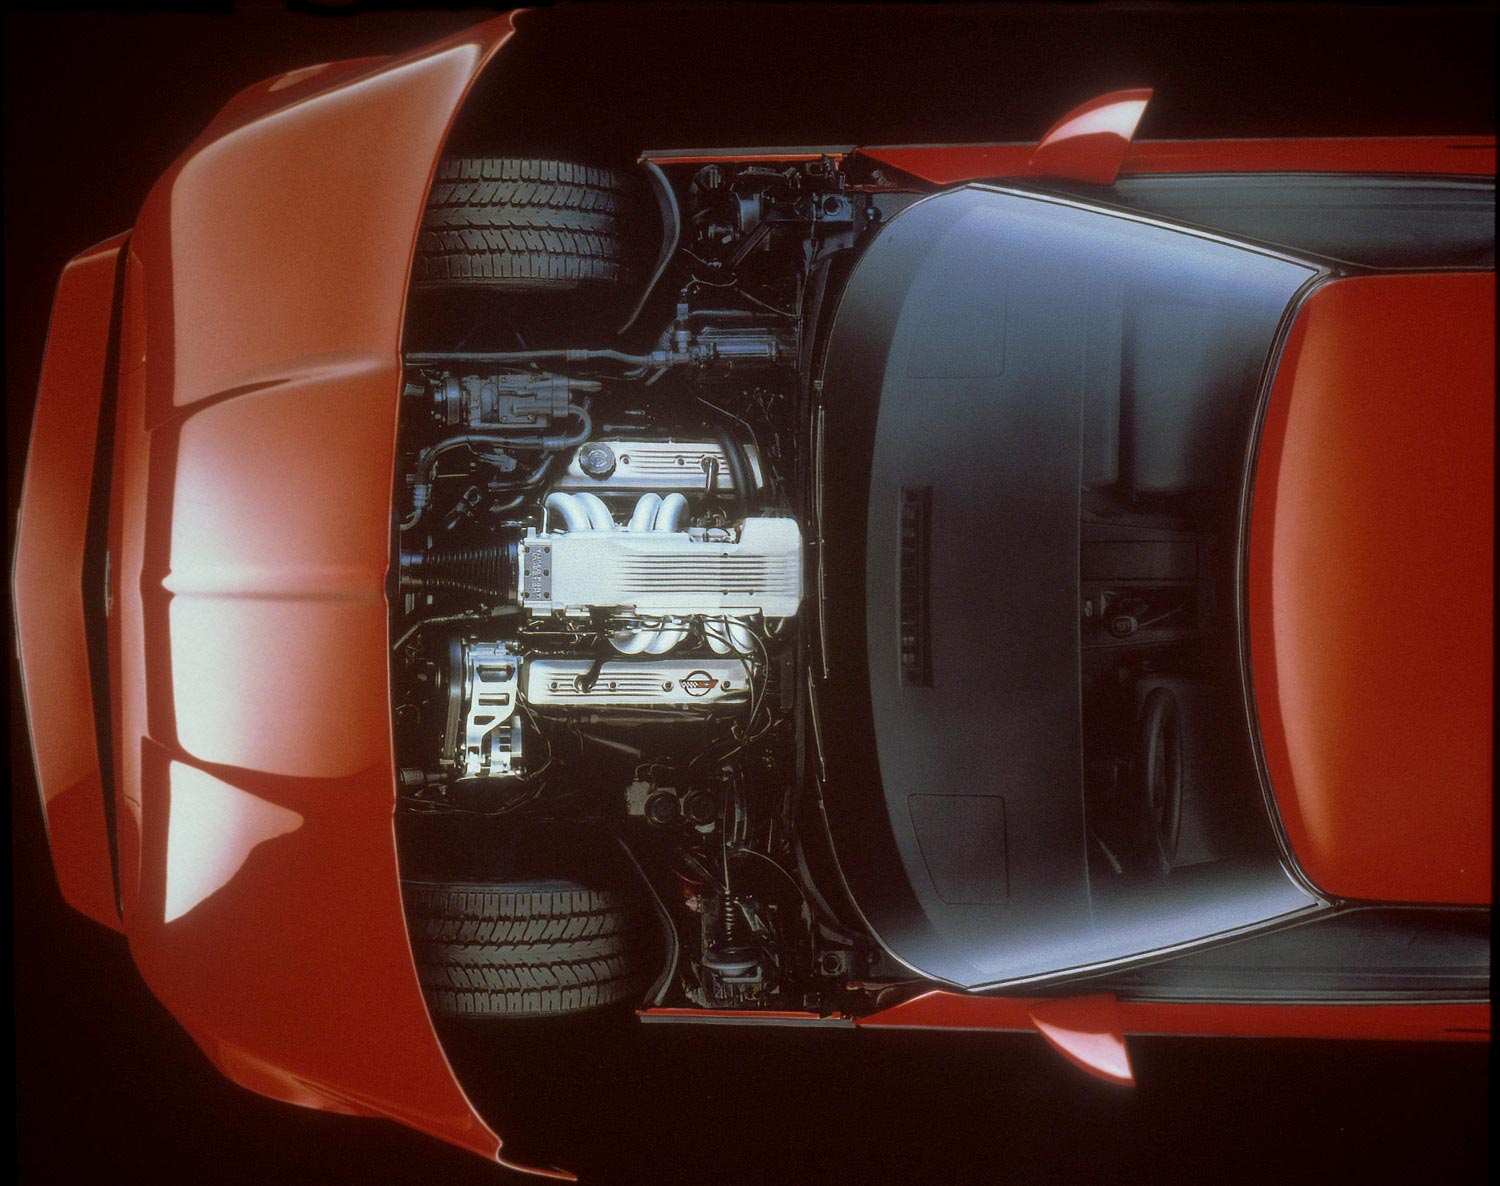 1988 Corvette 350 cubic inch Engine